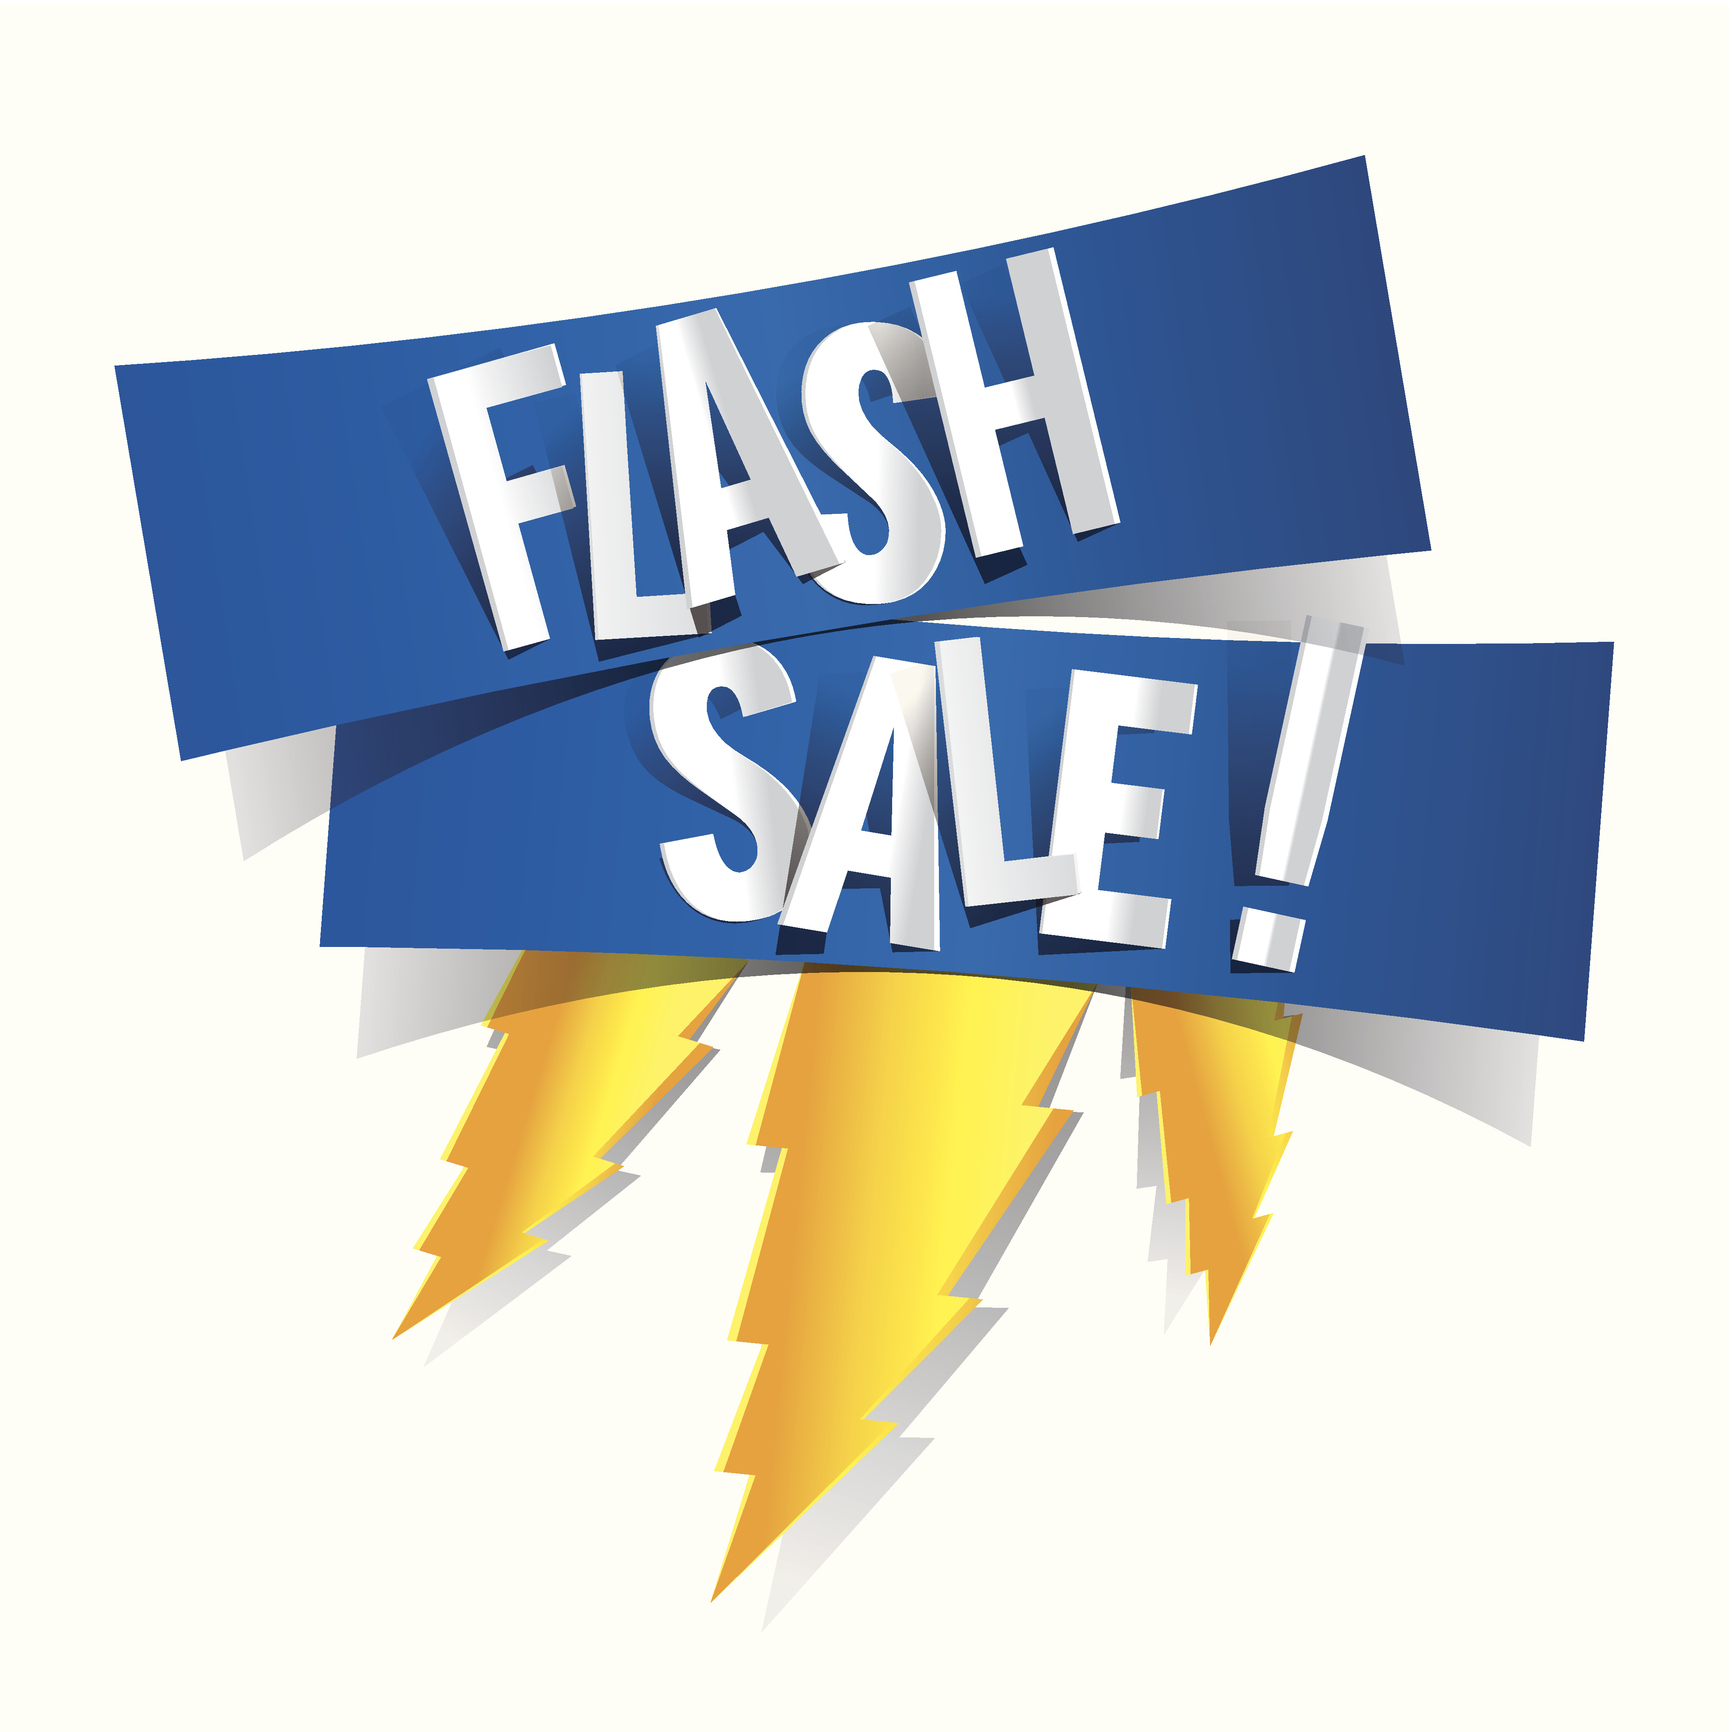 Flash Sales